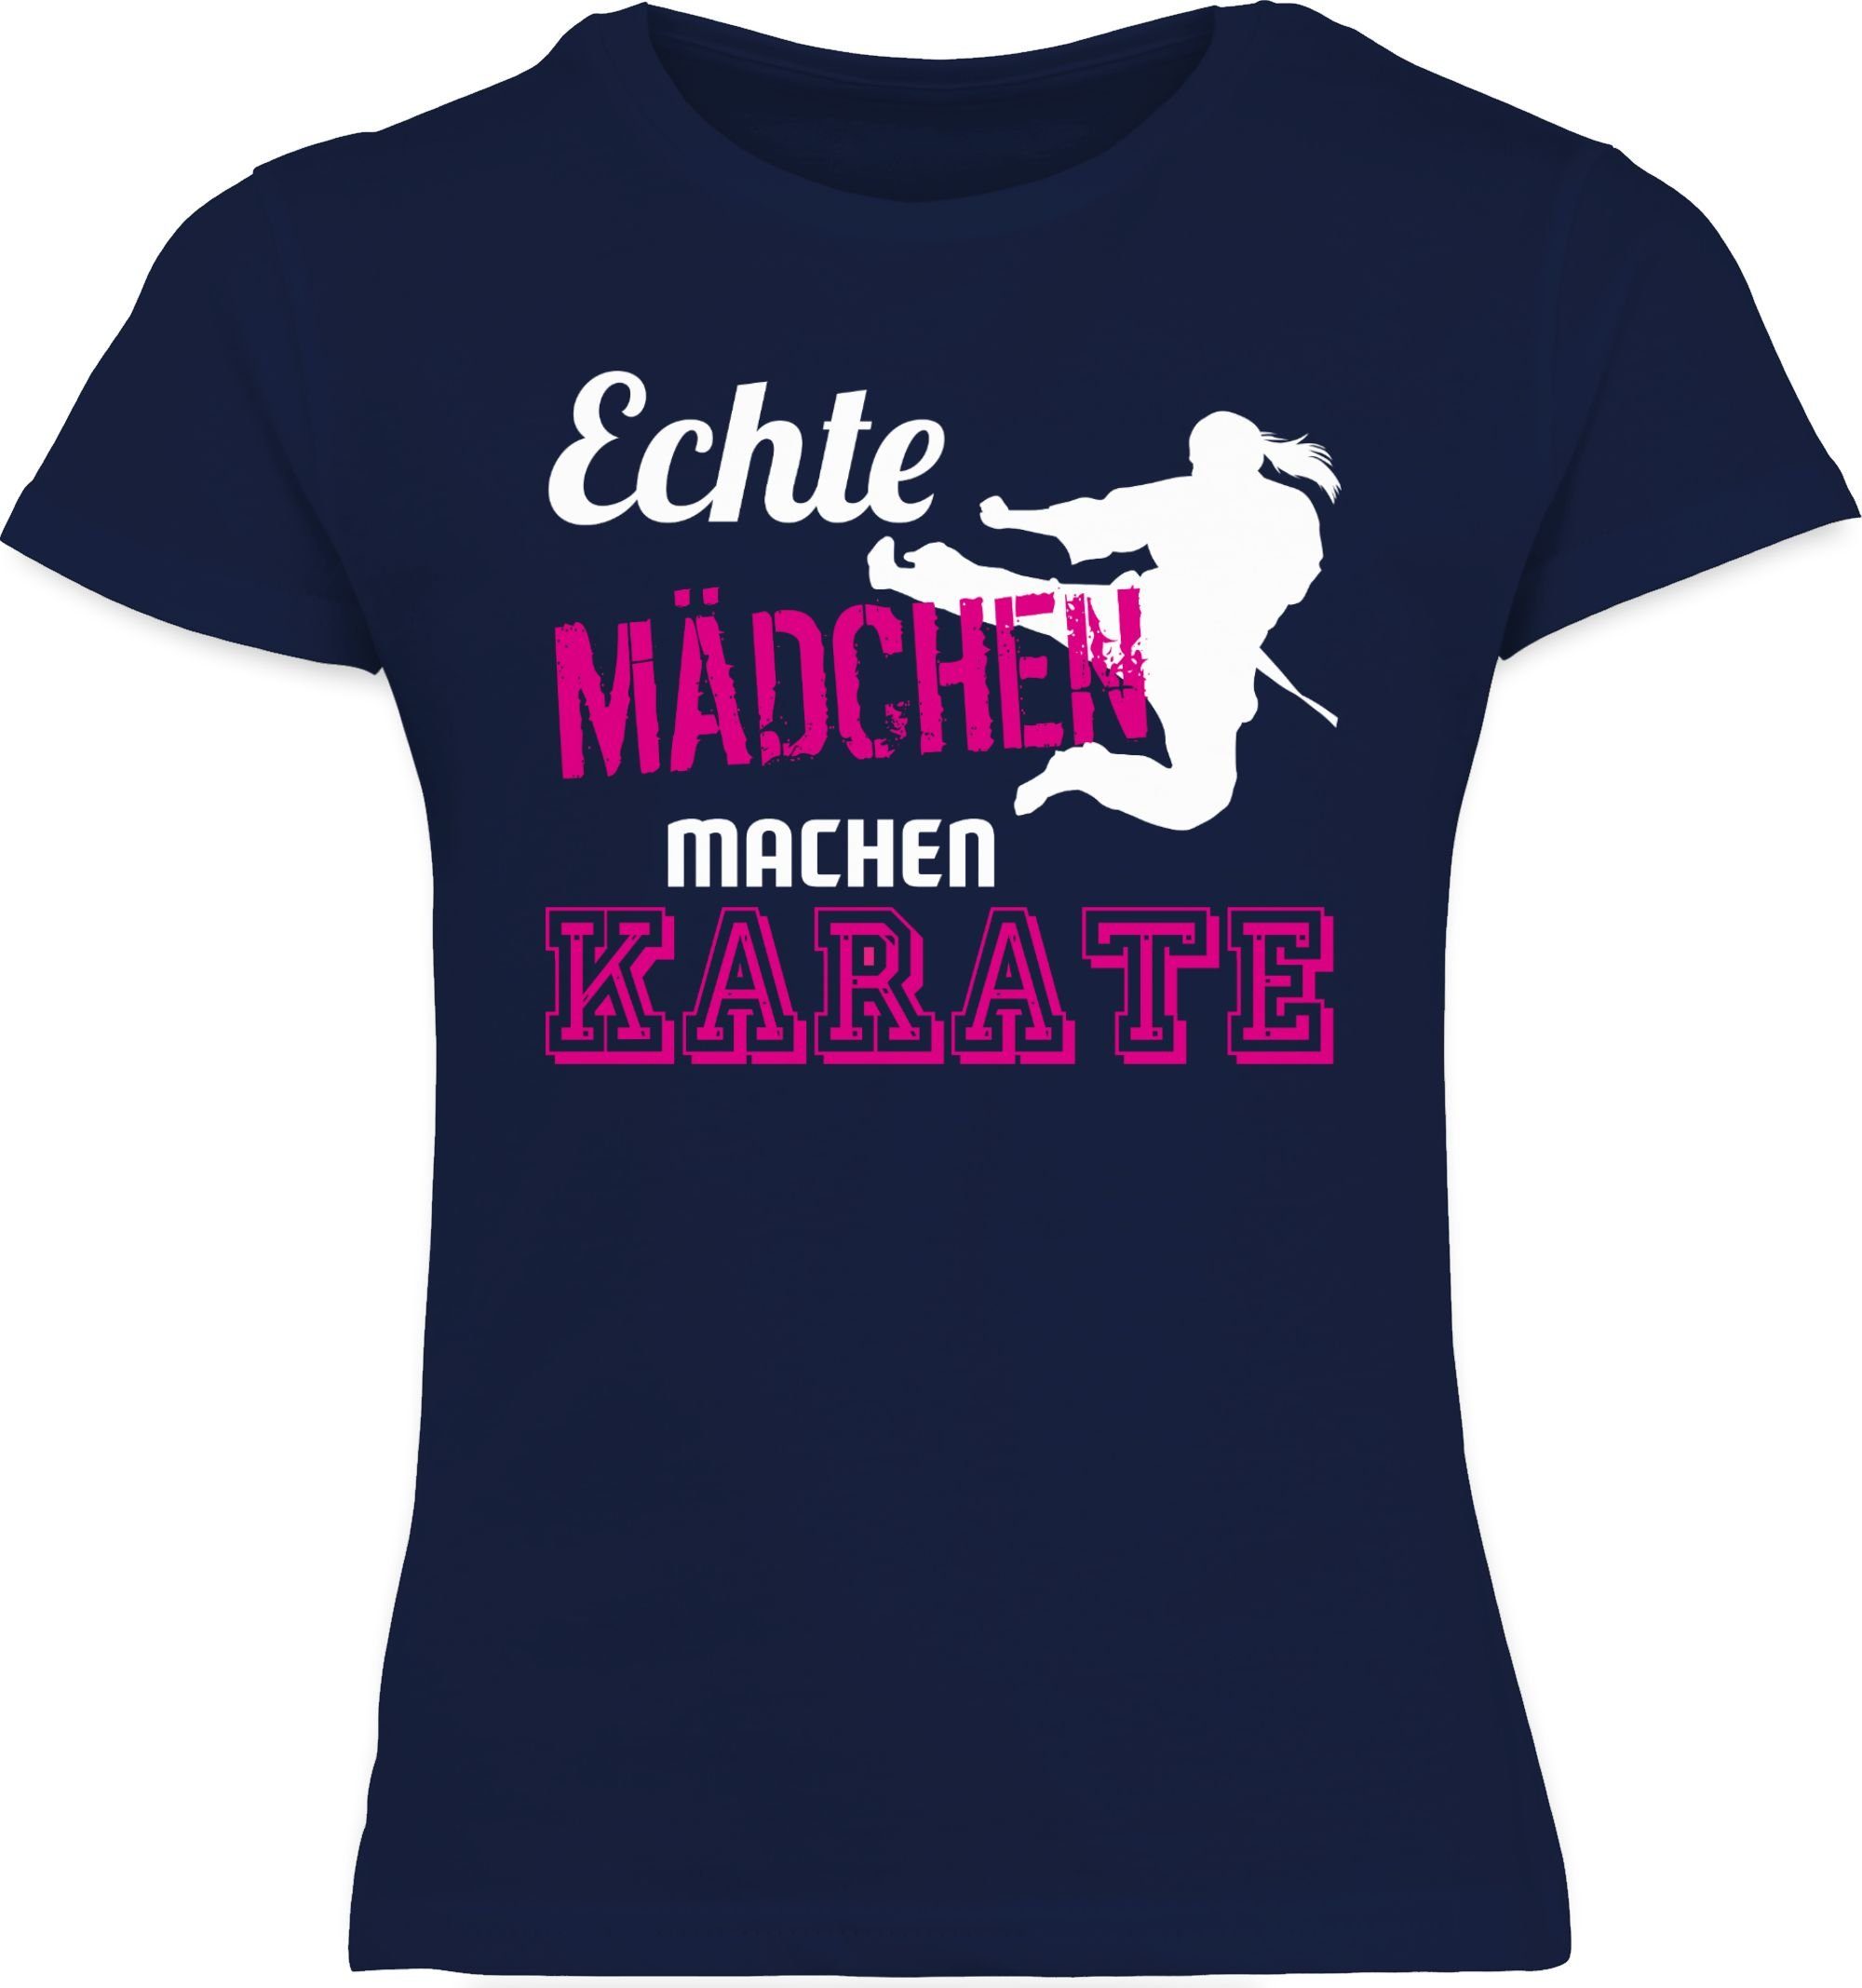 Dunkelblau Karate machen Mädchen Kinder Echte Kleidung 2 T-Shirt Sport Shirtracer